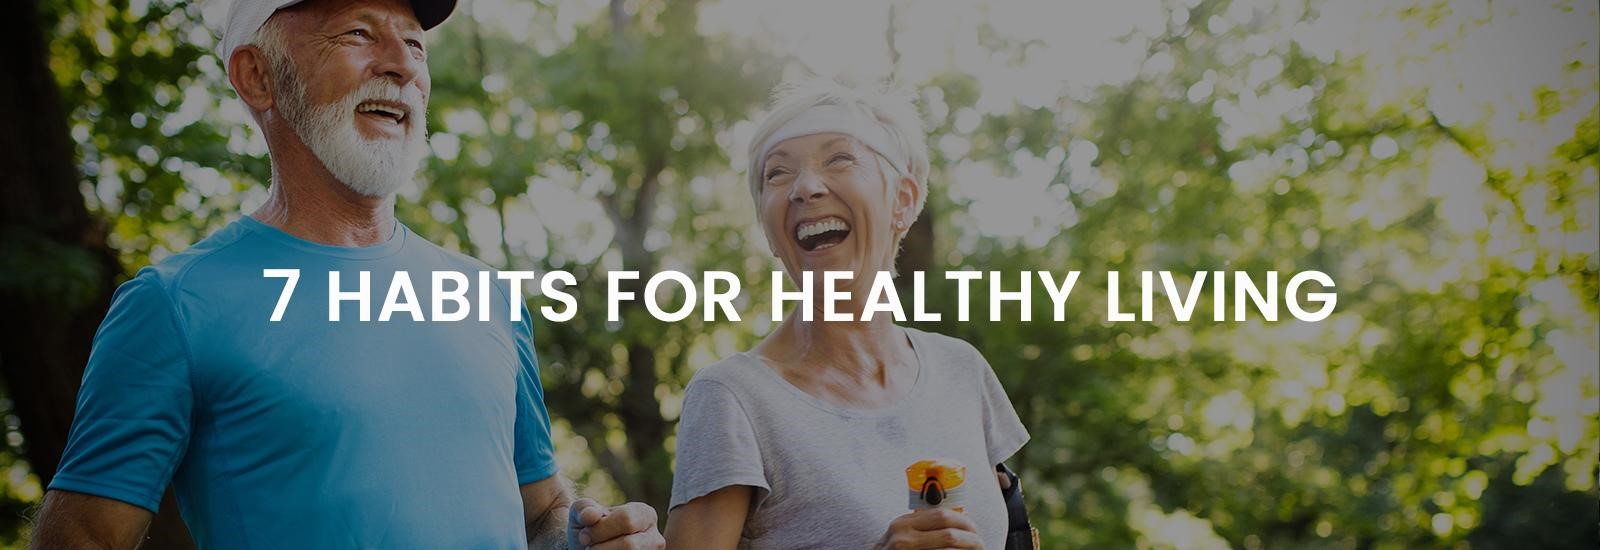 7 Habits for Healthy Living | Banner Image